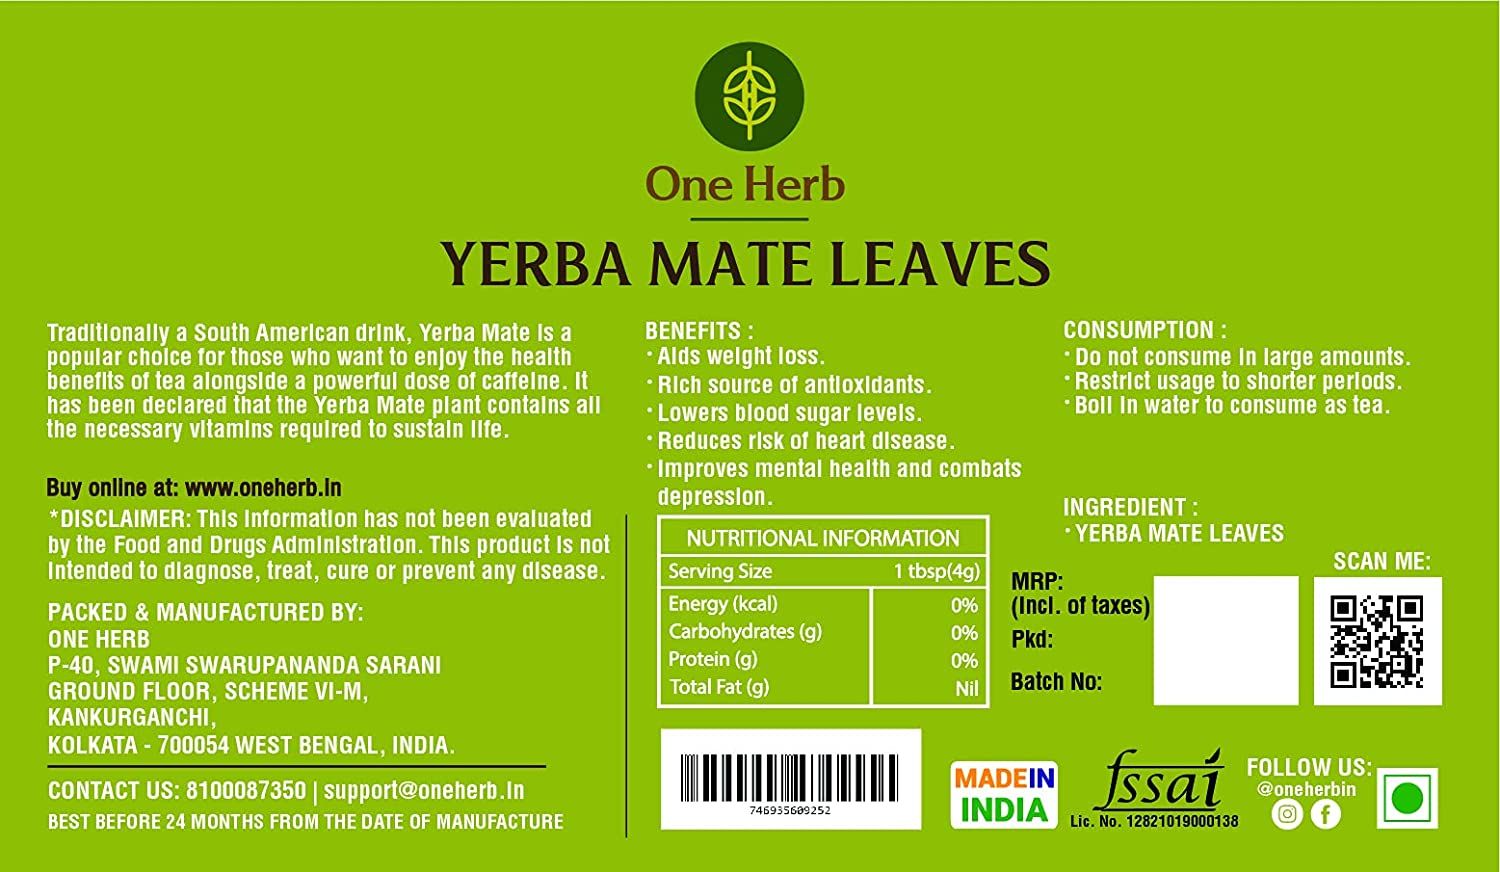 One Herb Yerba Mate Tea Image